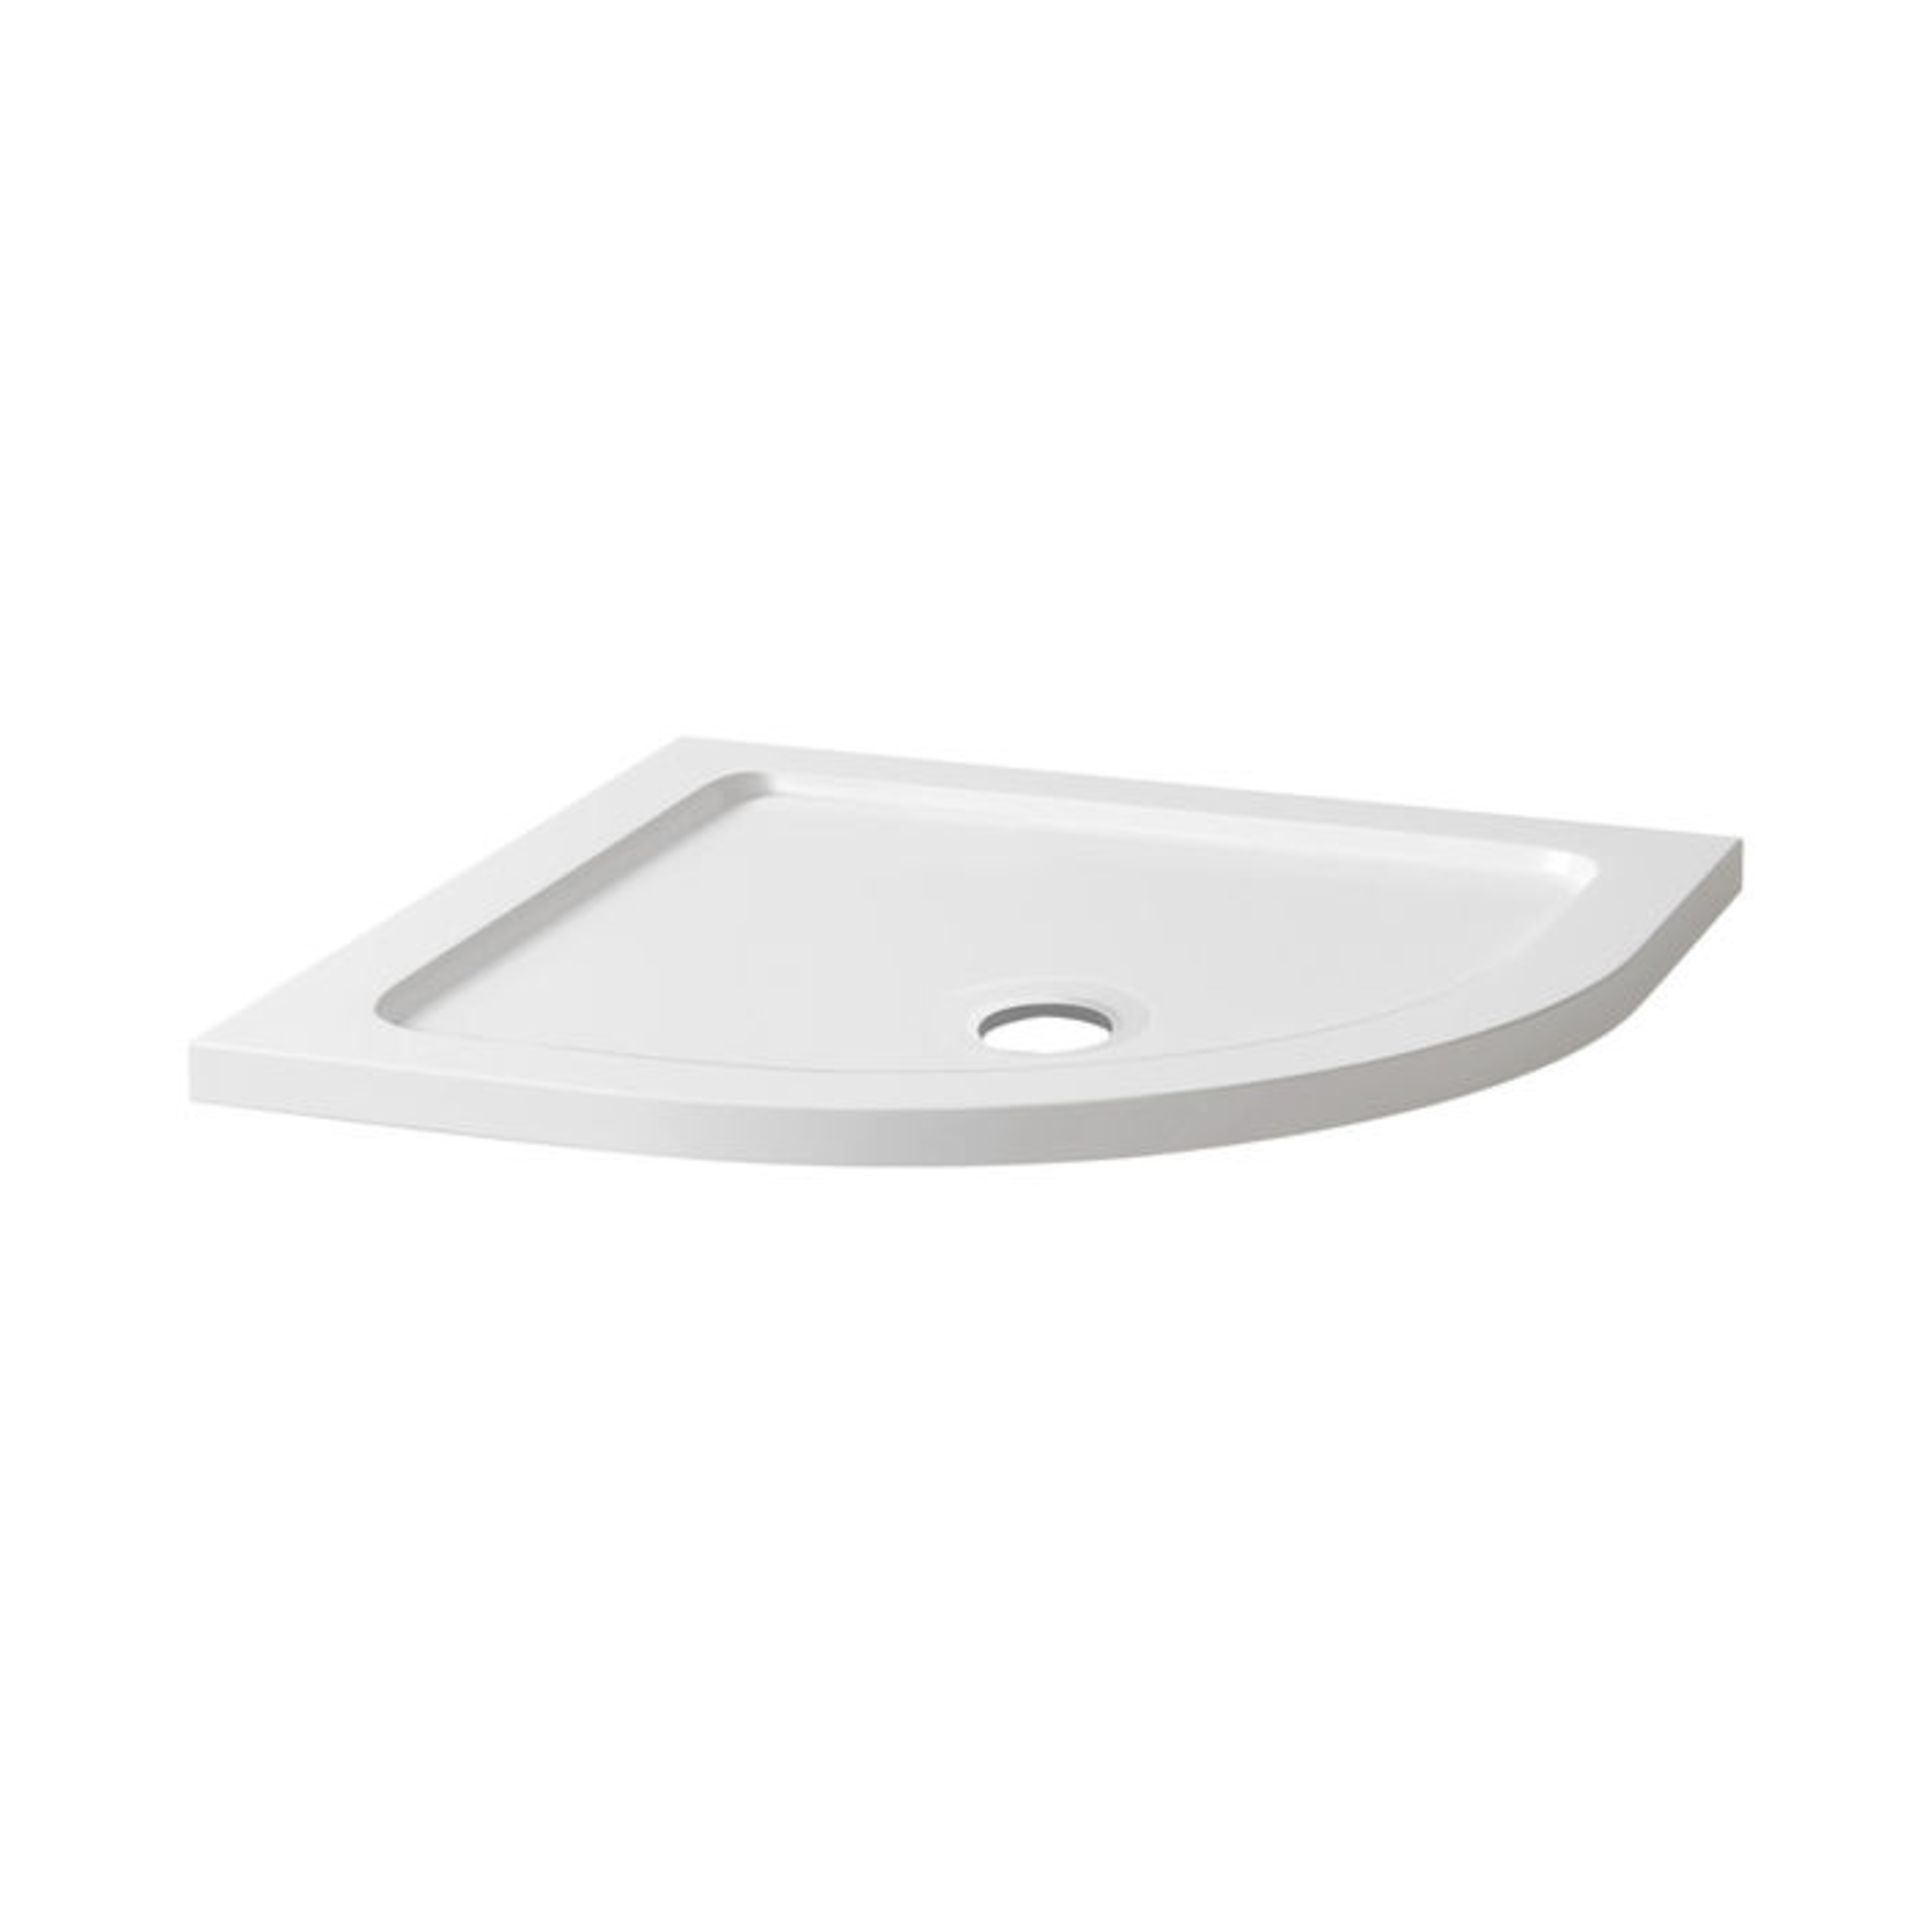 NEW 900x900mm Quadrant Ultra Slim Stone Shower Tray.RRP £224.99.Low profile ultra slim design... - Image 2 of 2